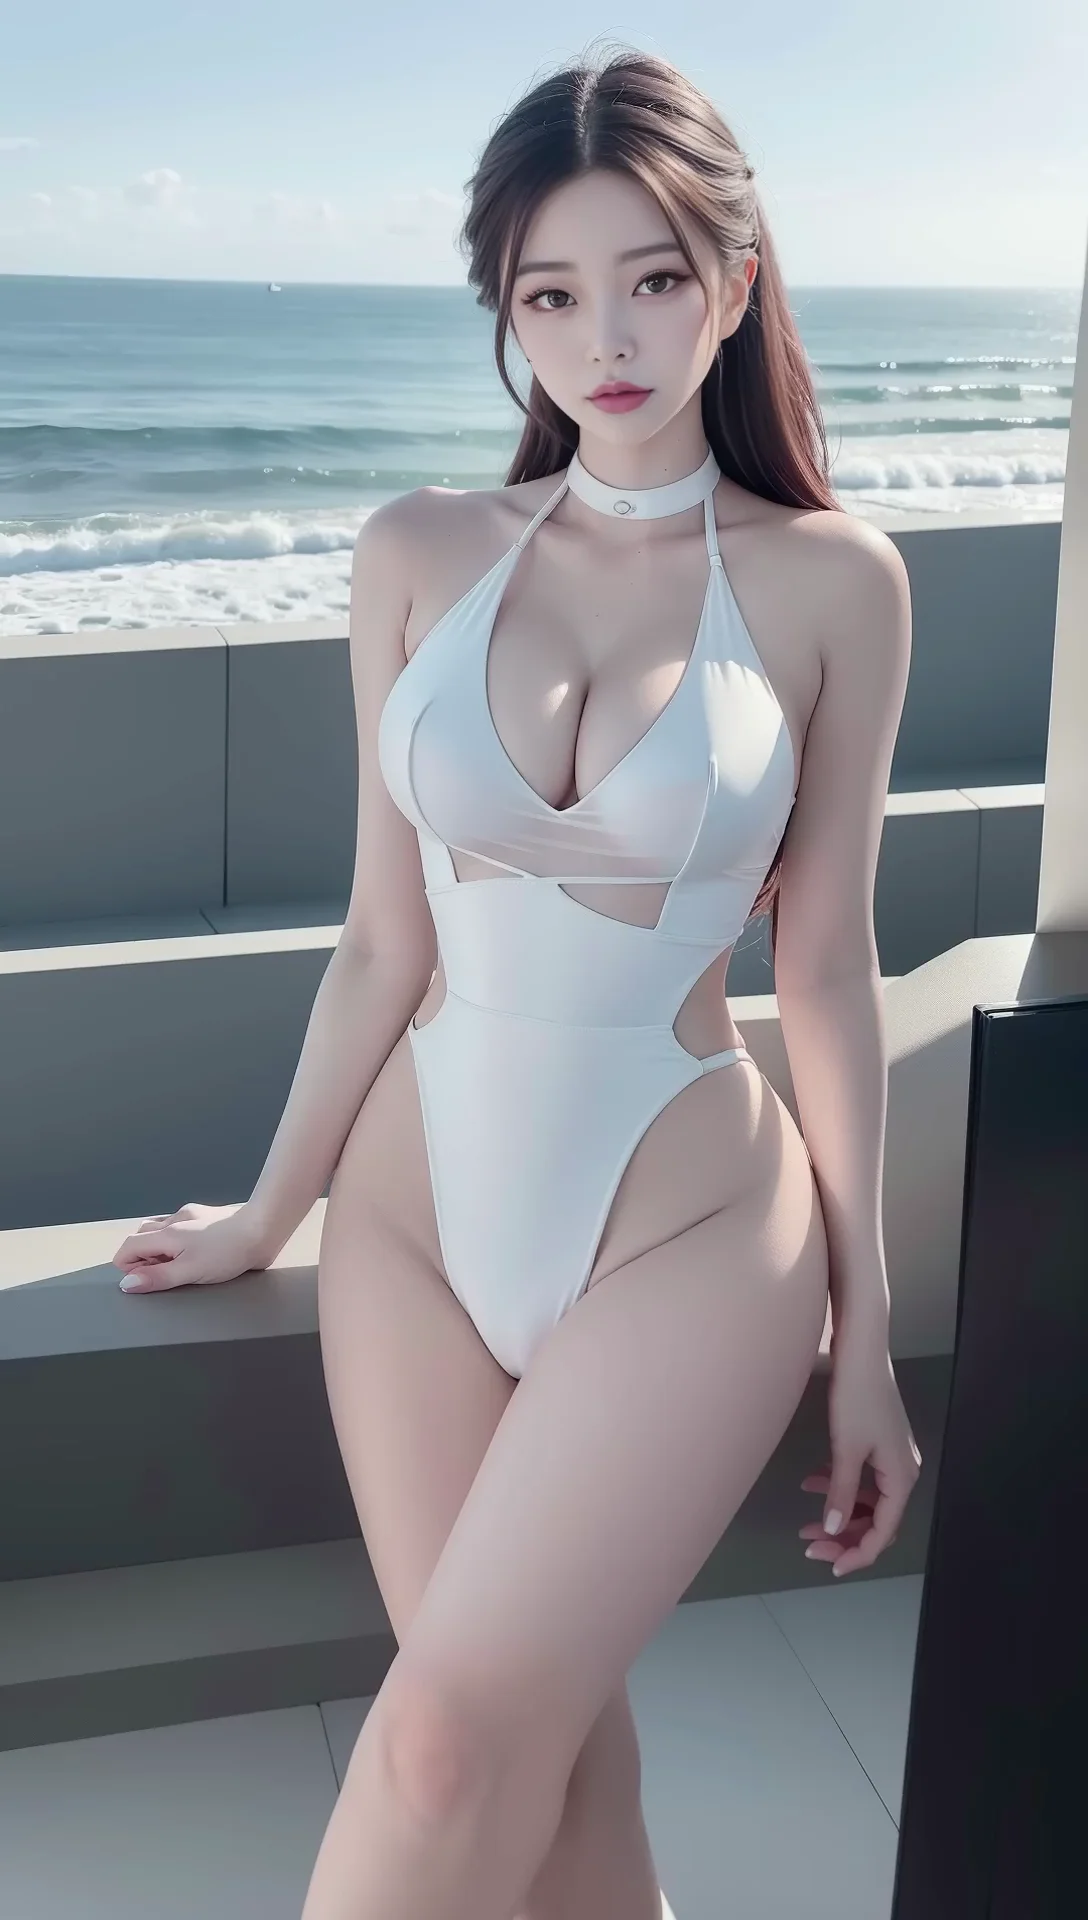 Ai Art Lookbook: Sexy Girl Swimsuit on the Resort Terrace Image 33